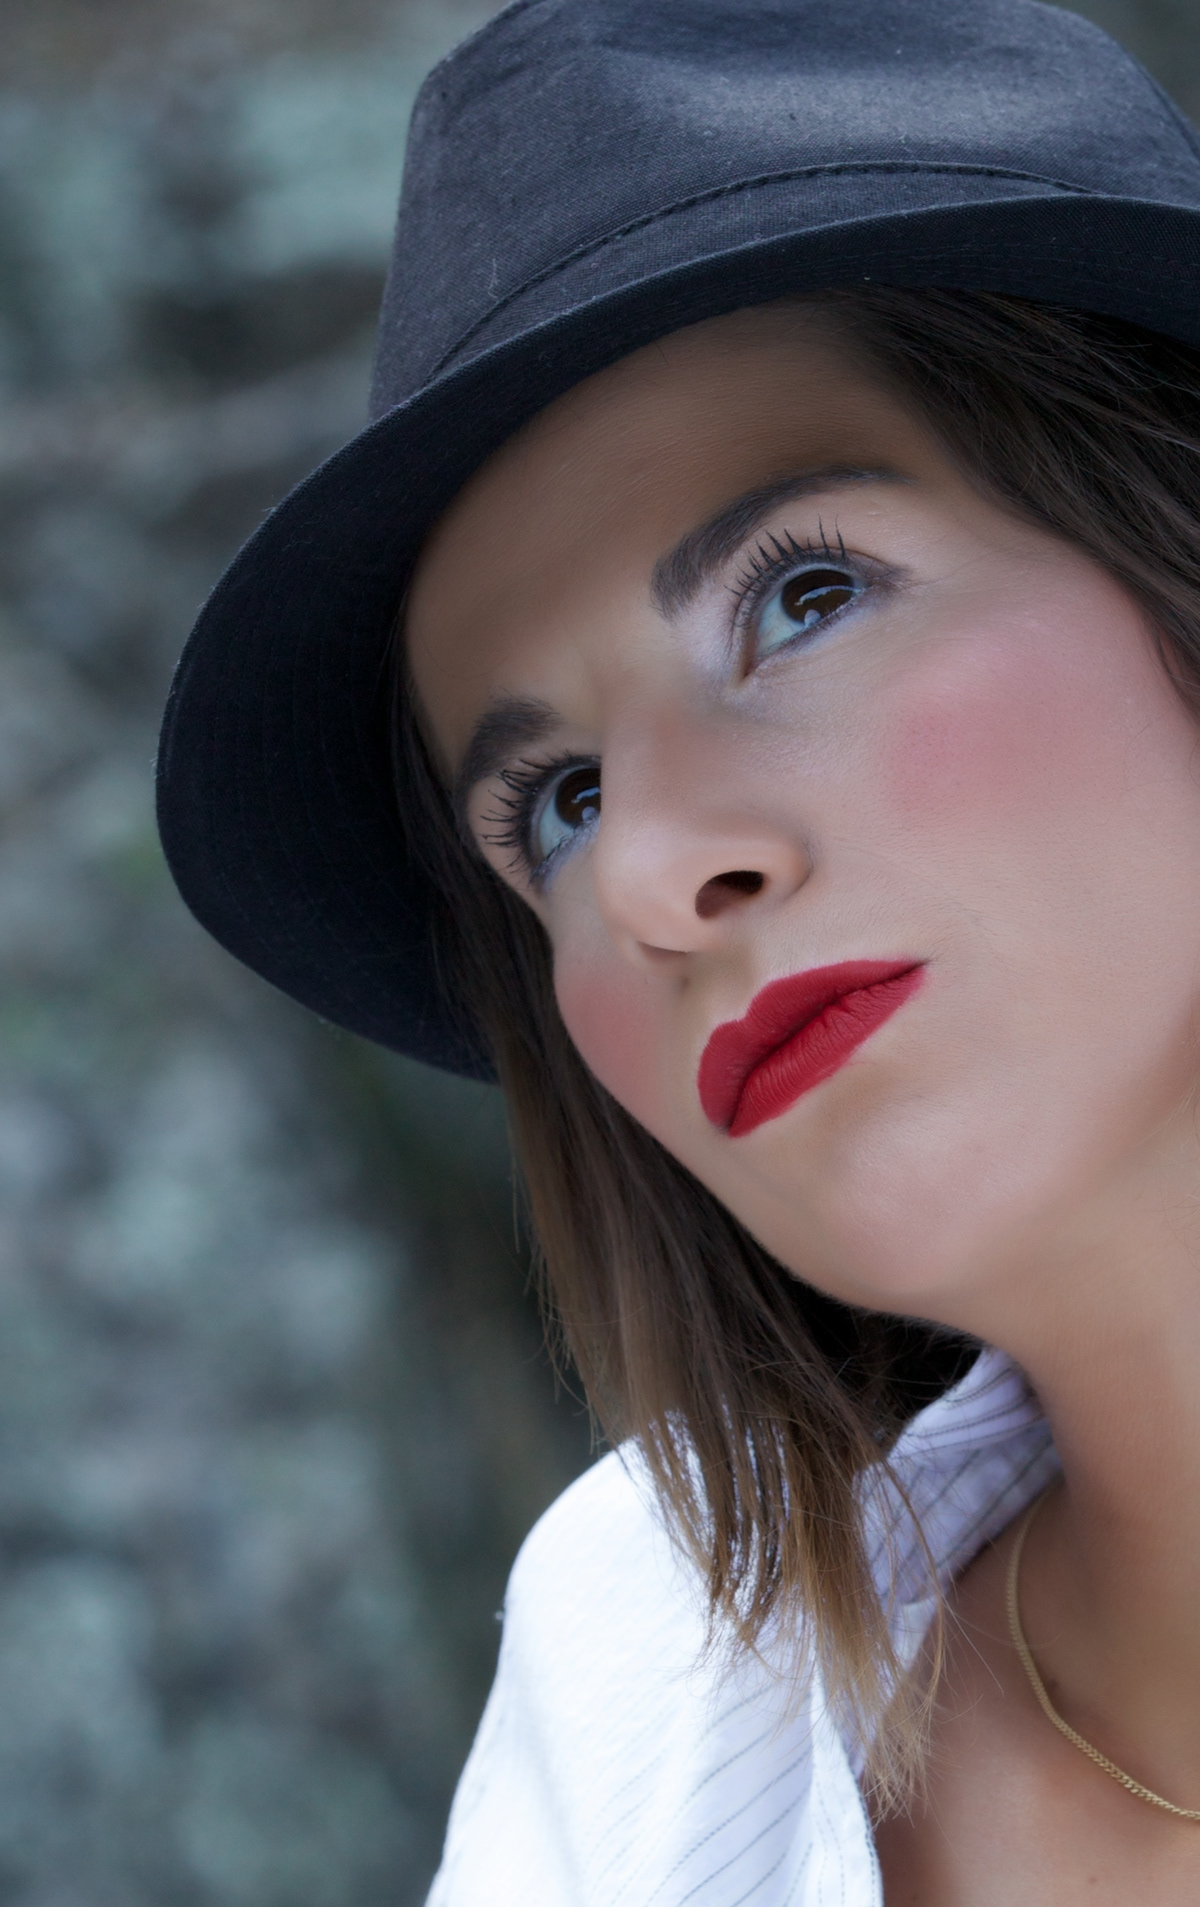 cosmetics MAKE UP ARTIST photoshooting eyesbrows art retouch model make up beauty